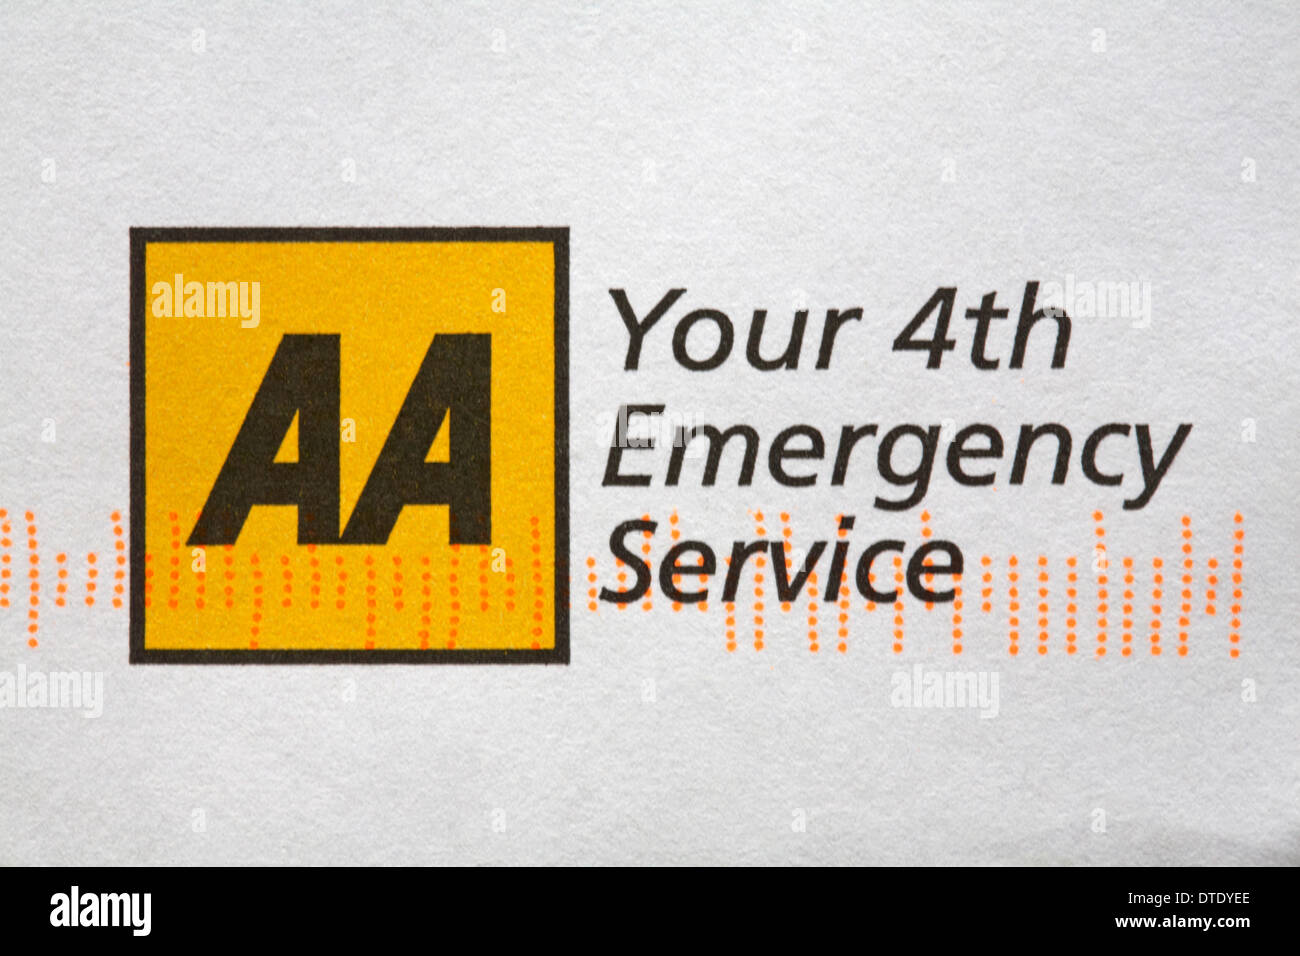 AA Your 4th emergency service logo on envelope - UK Stock Photo